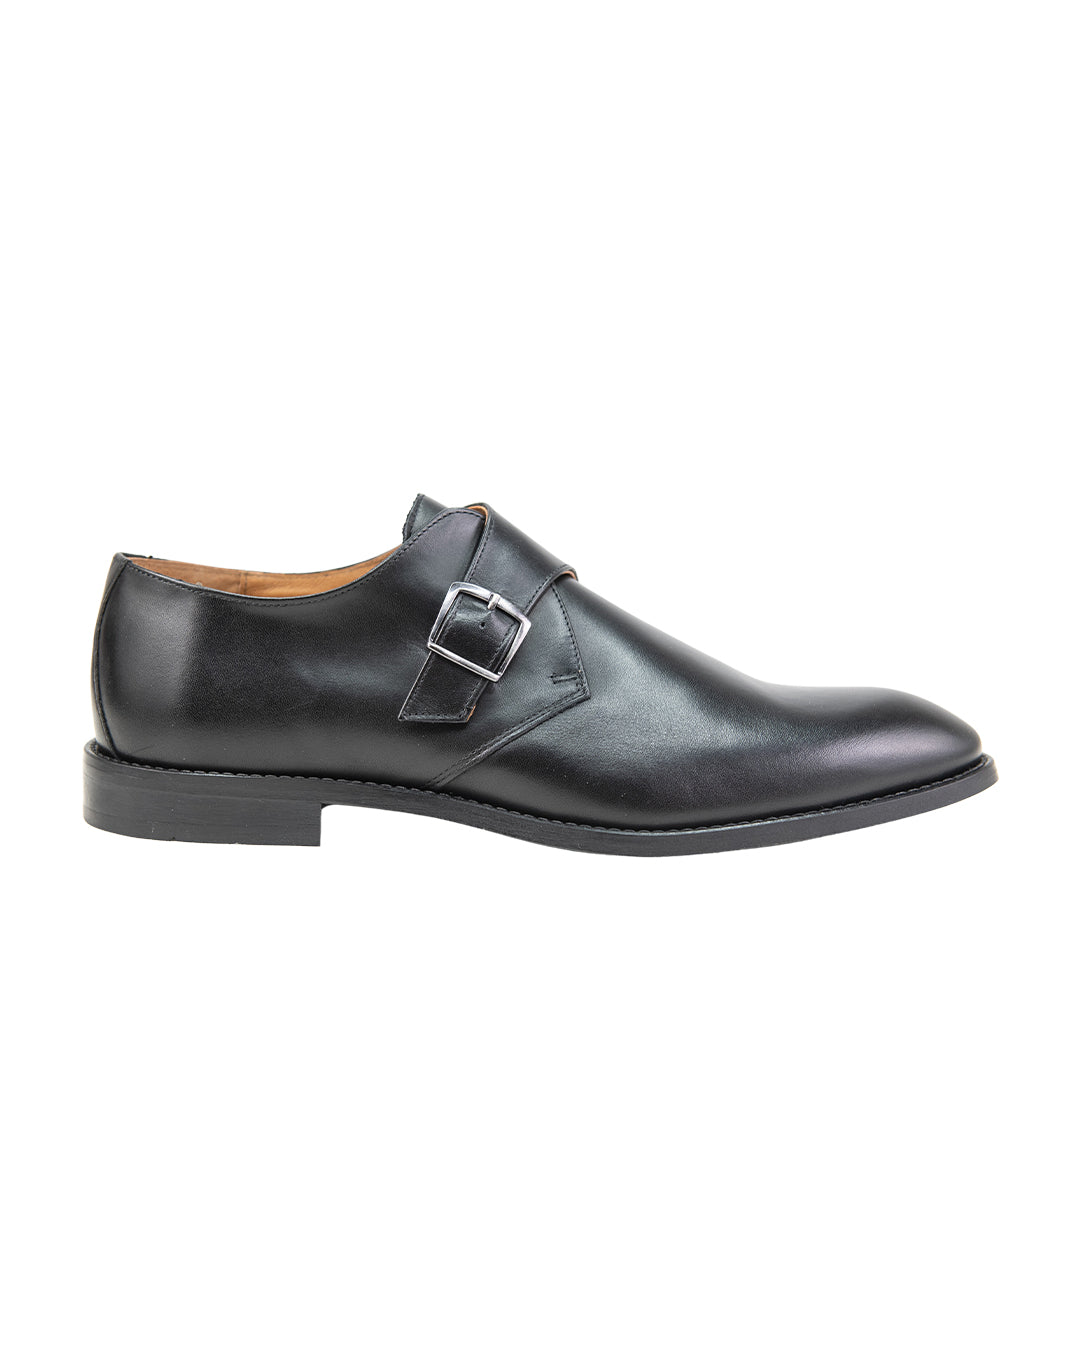 Black Leather Single Buckle Monk Strap Shoes